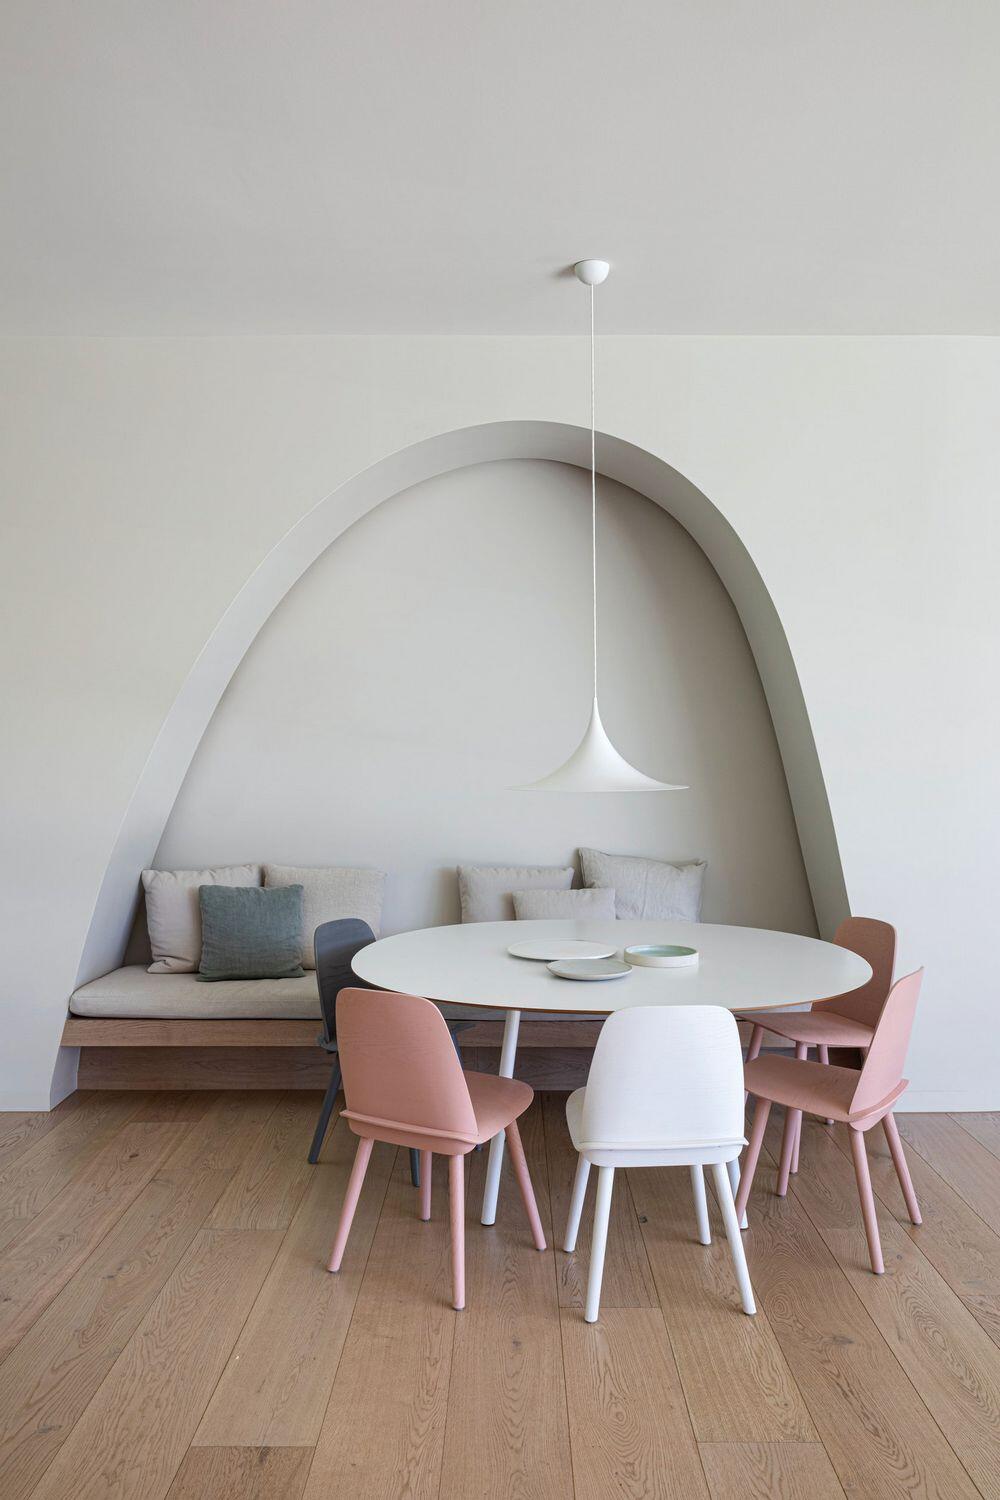 Brush House by Leeton Pointon Architects + Interiors